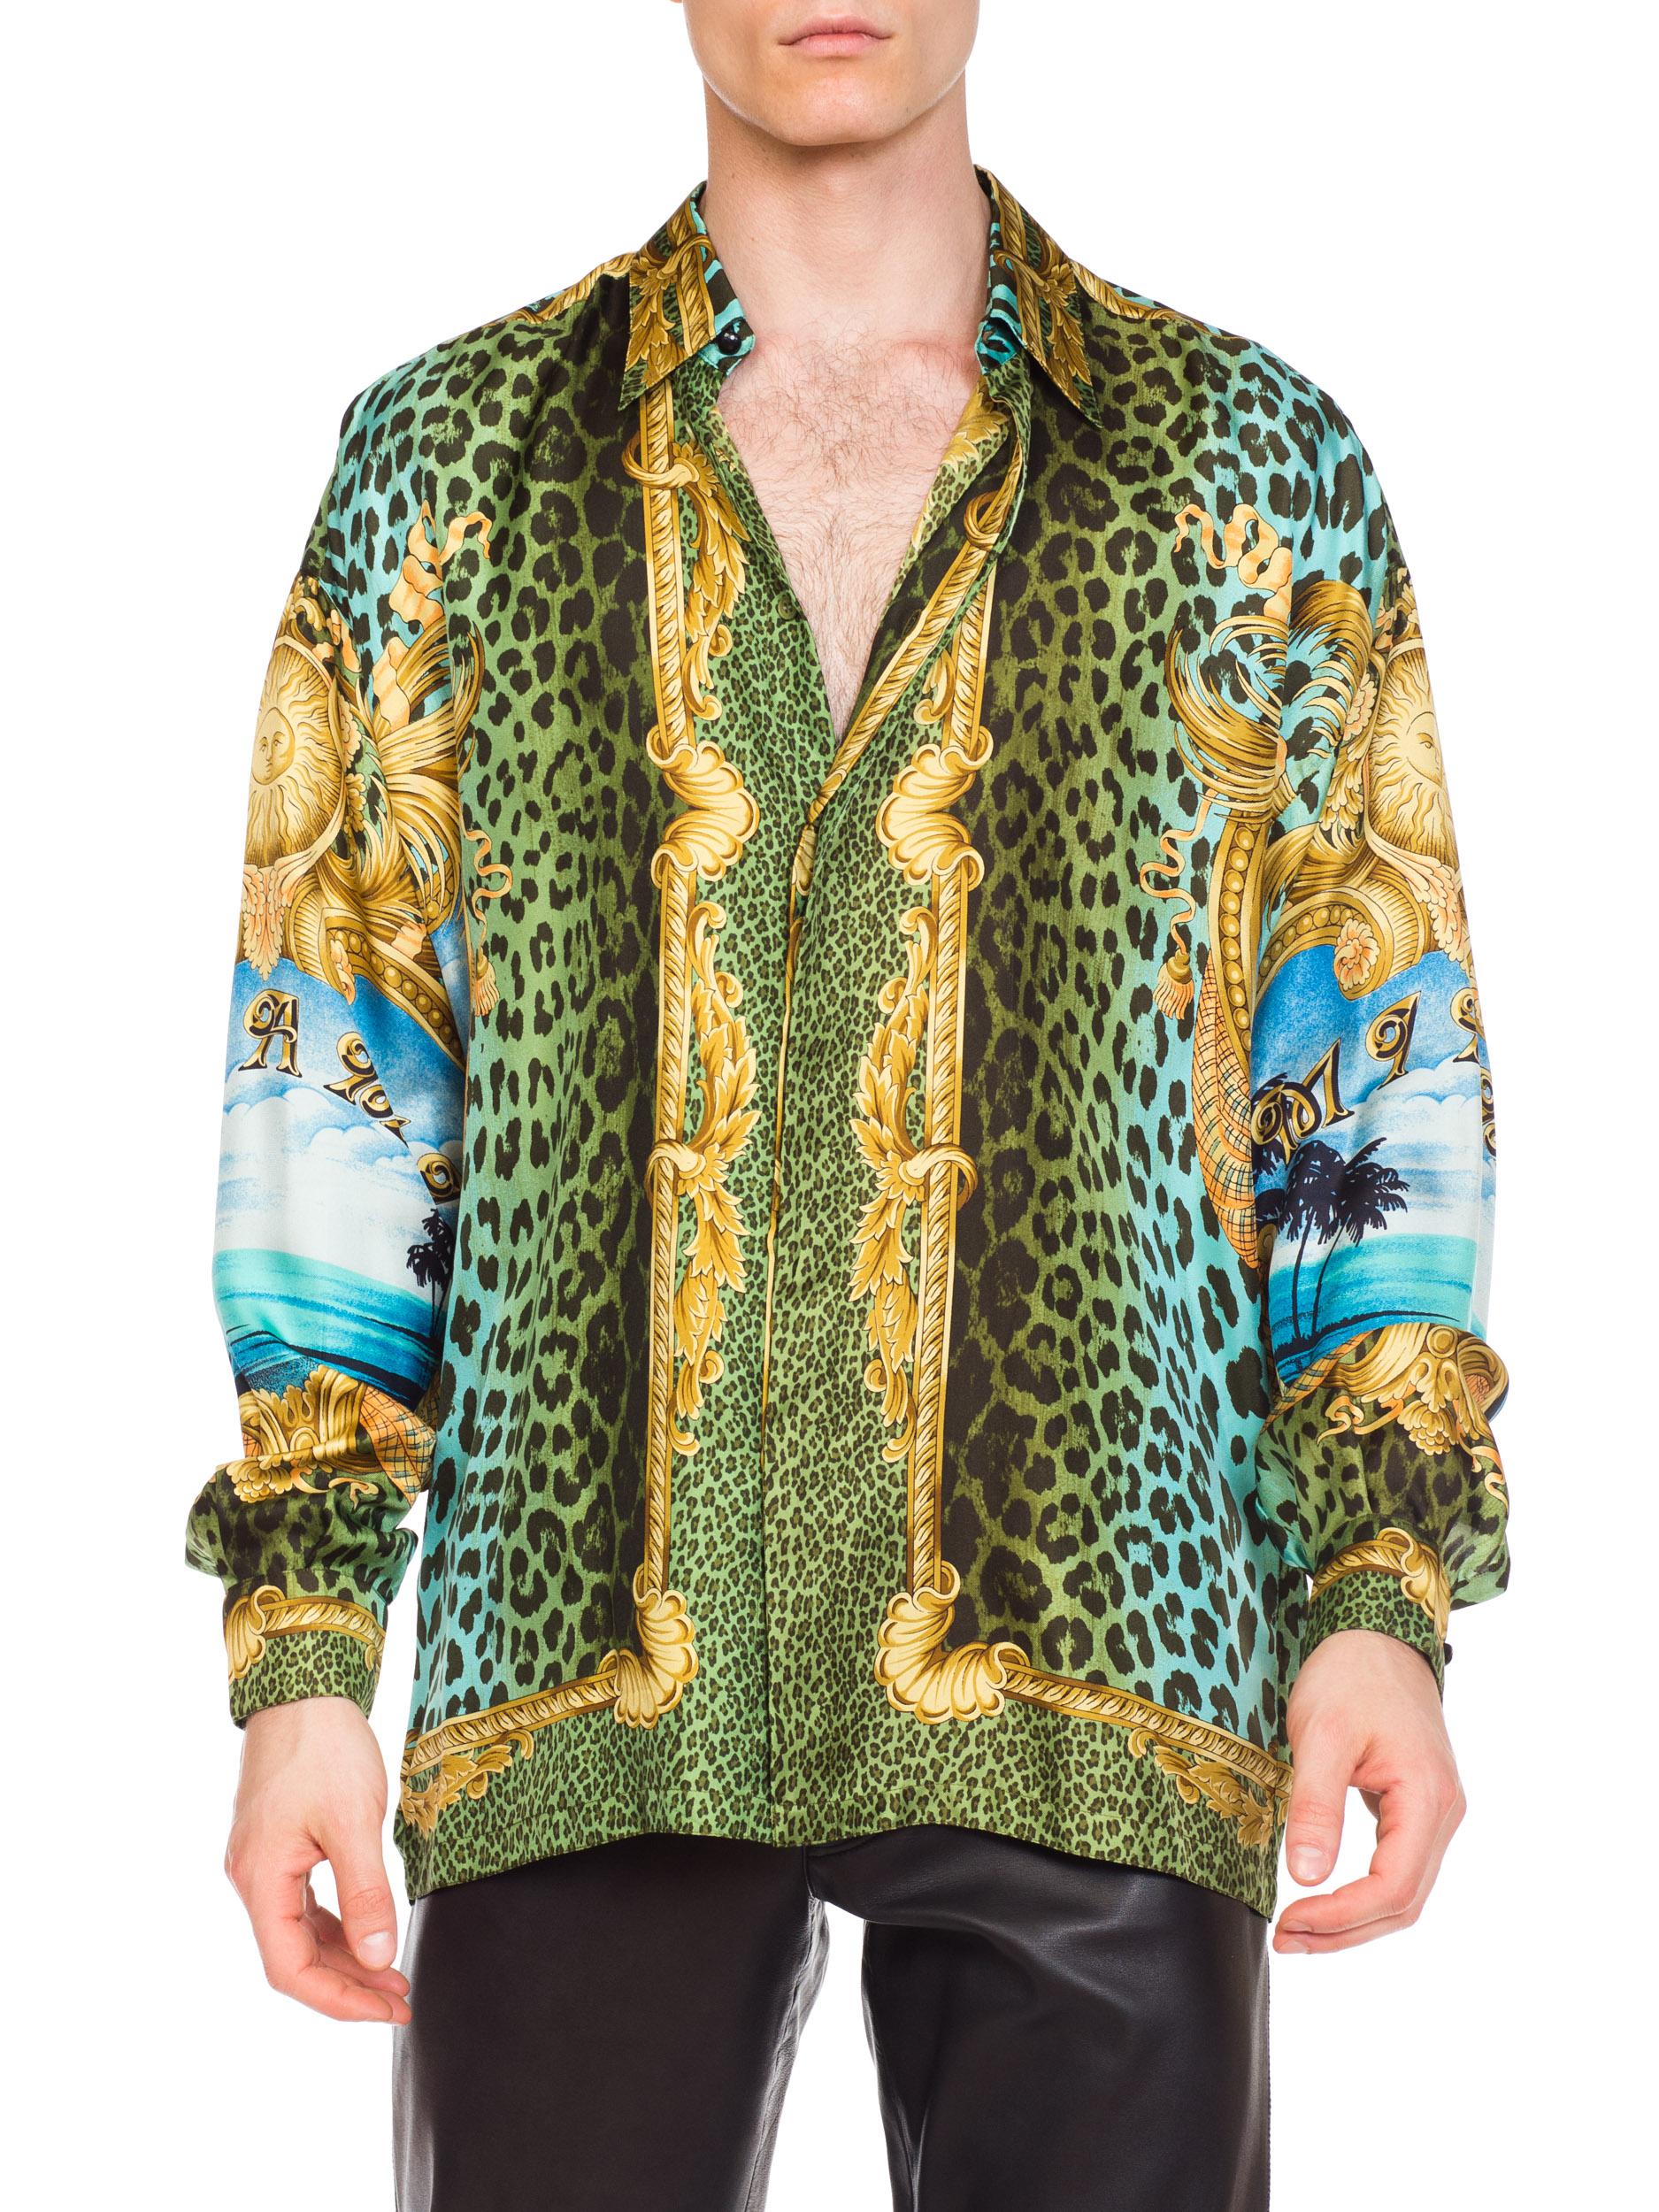 Gianni Versace Miami Leopard Baroque Silk Shirt, 1990s  8